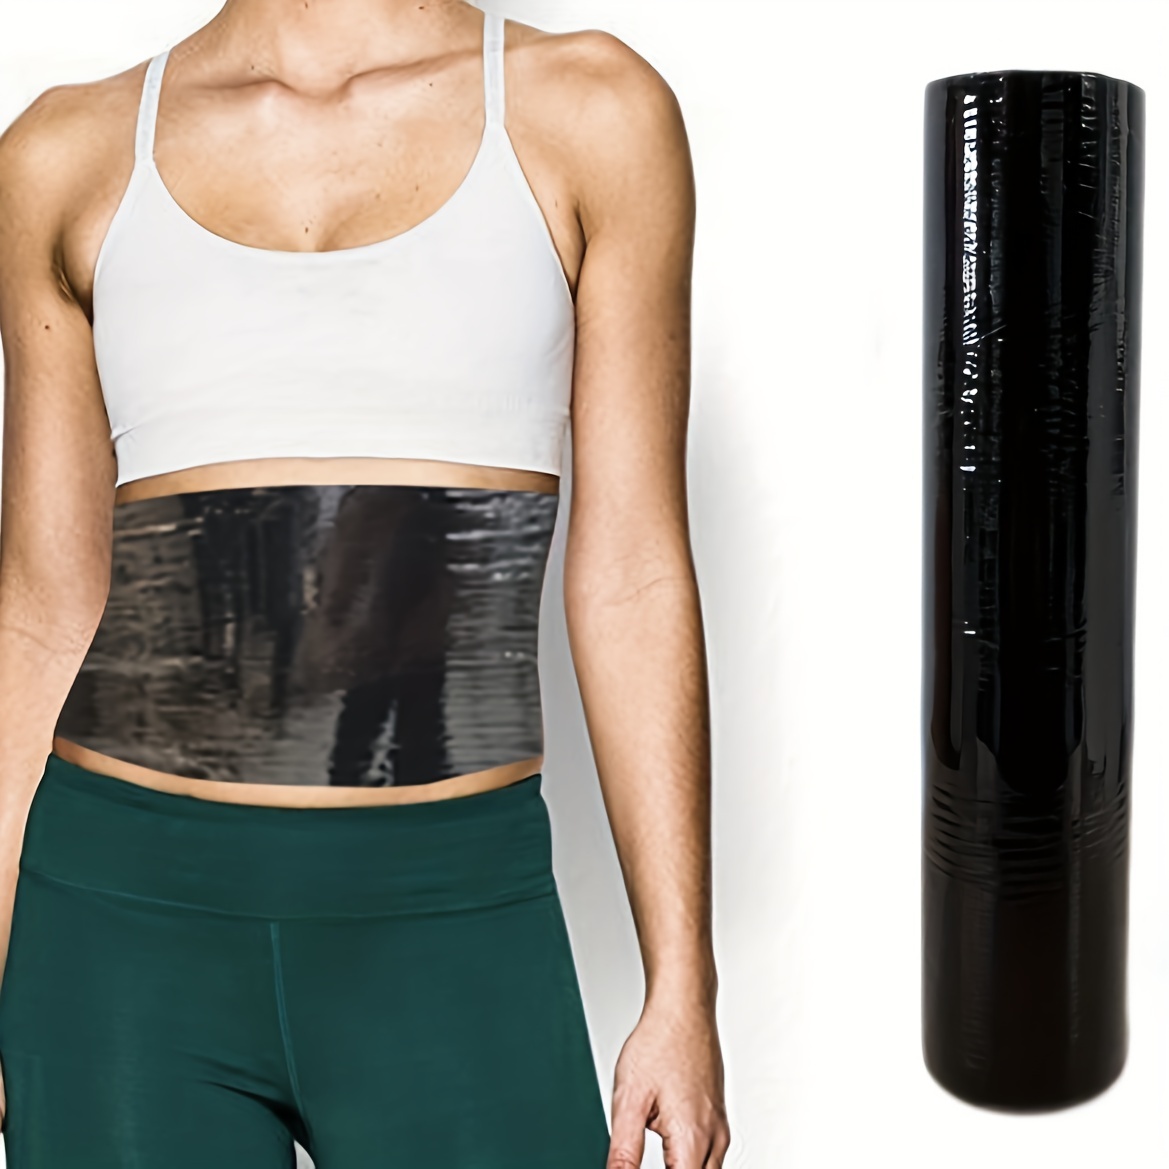 Shape-up Wraps Slimming Waist Tummy Belly Belt Wrap Body Plastic